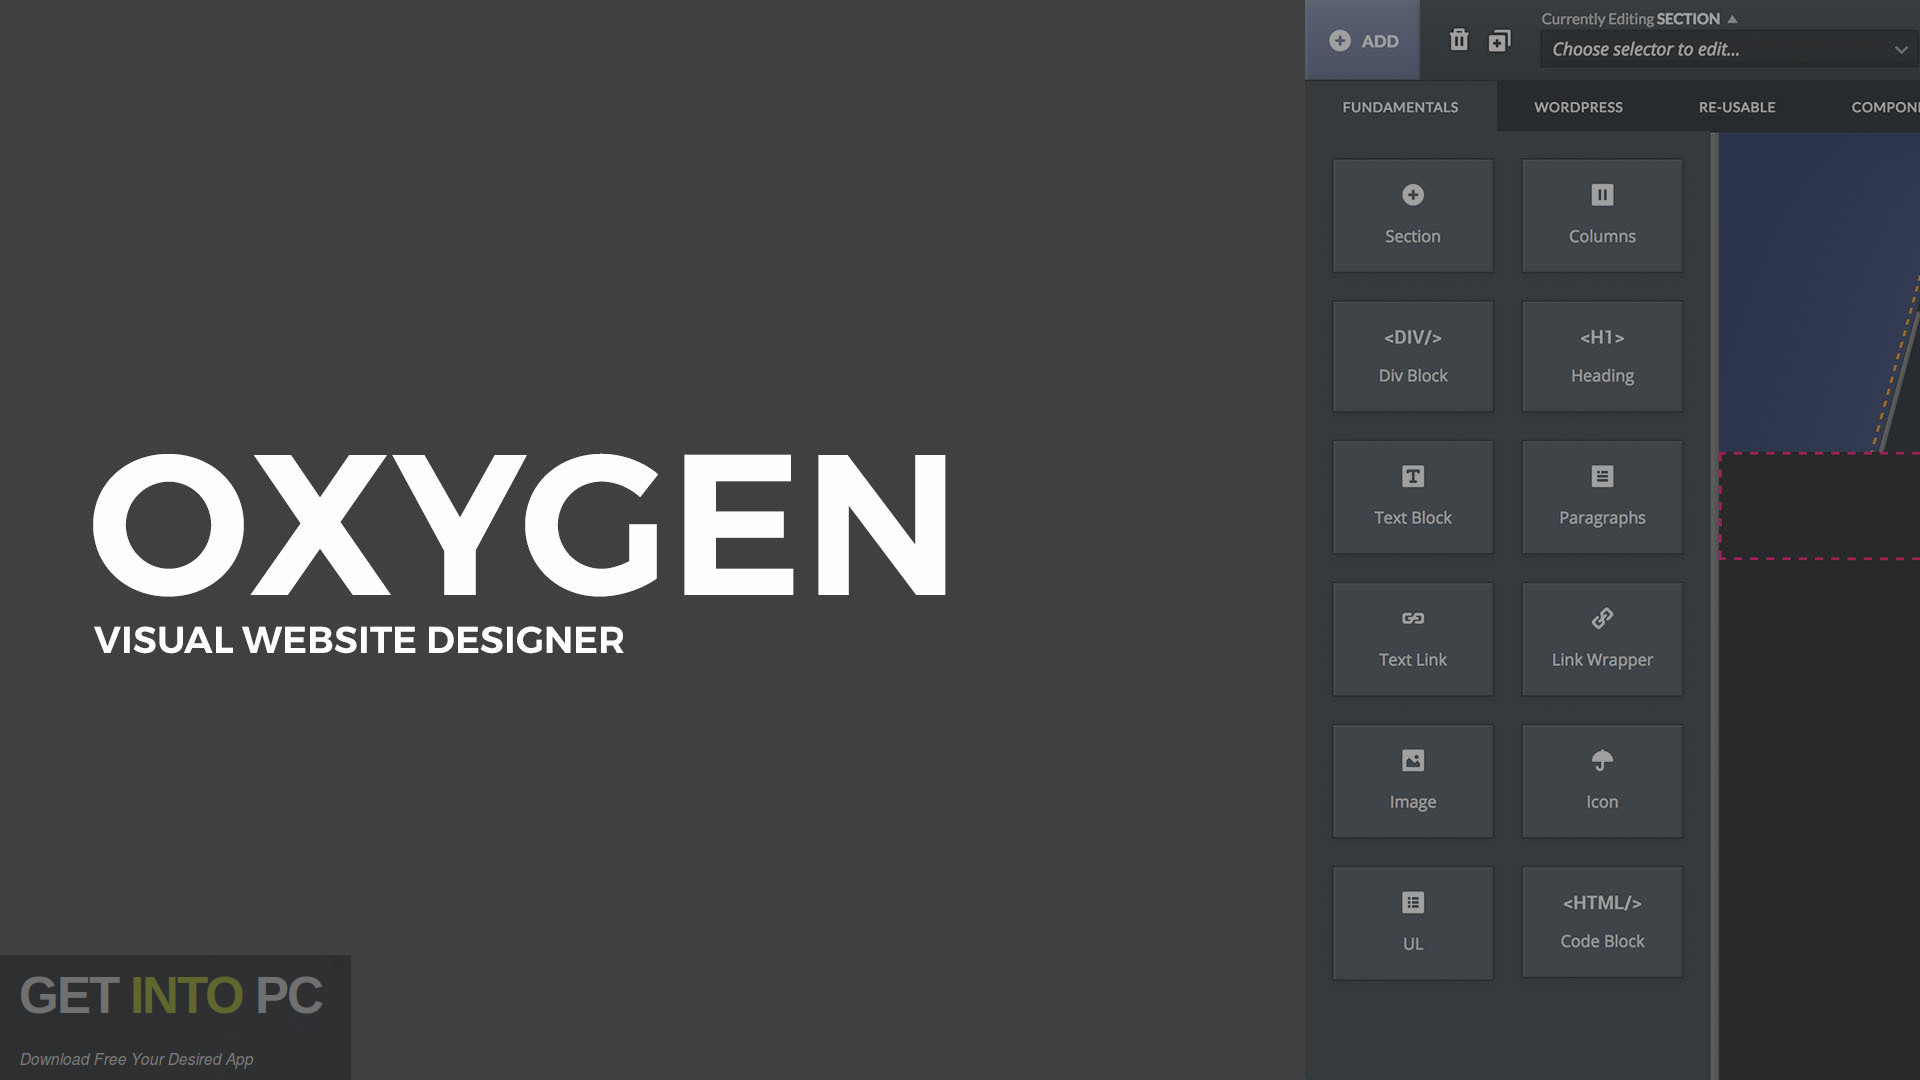 Oxygen WordPress Visual Site Builder Free Download GetintoPC.com